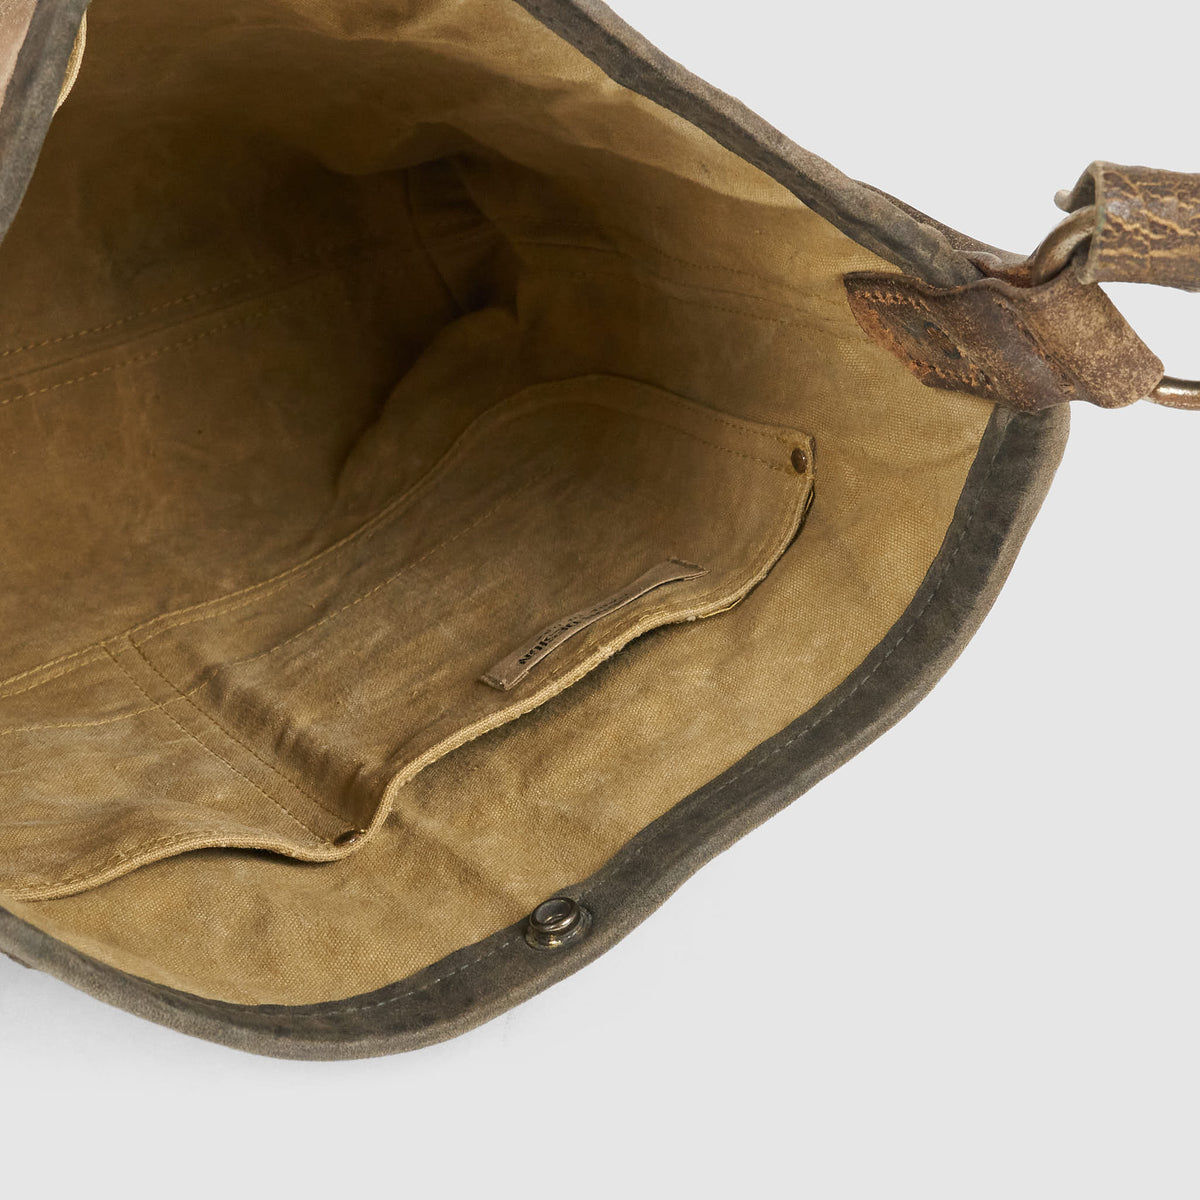 J. Augur Design Chaps Leather Concho Small Bag